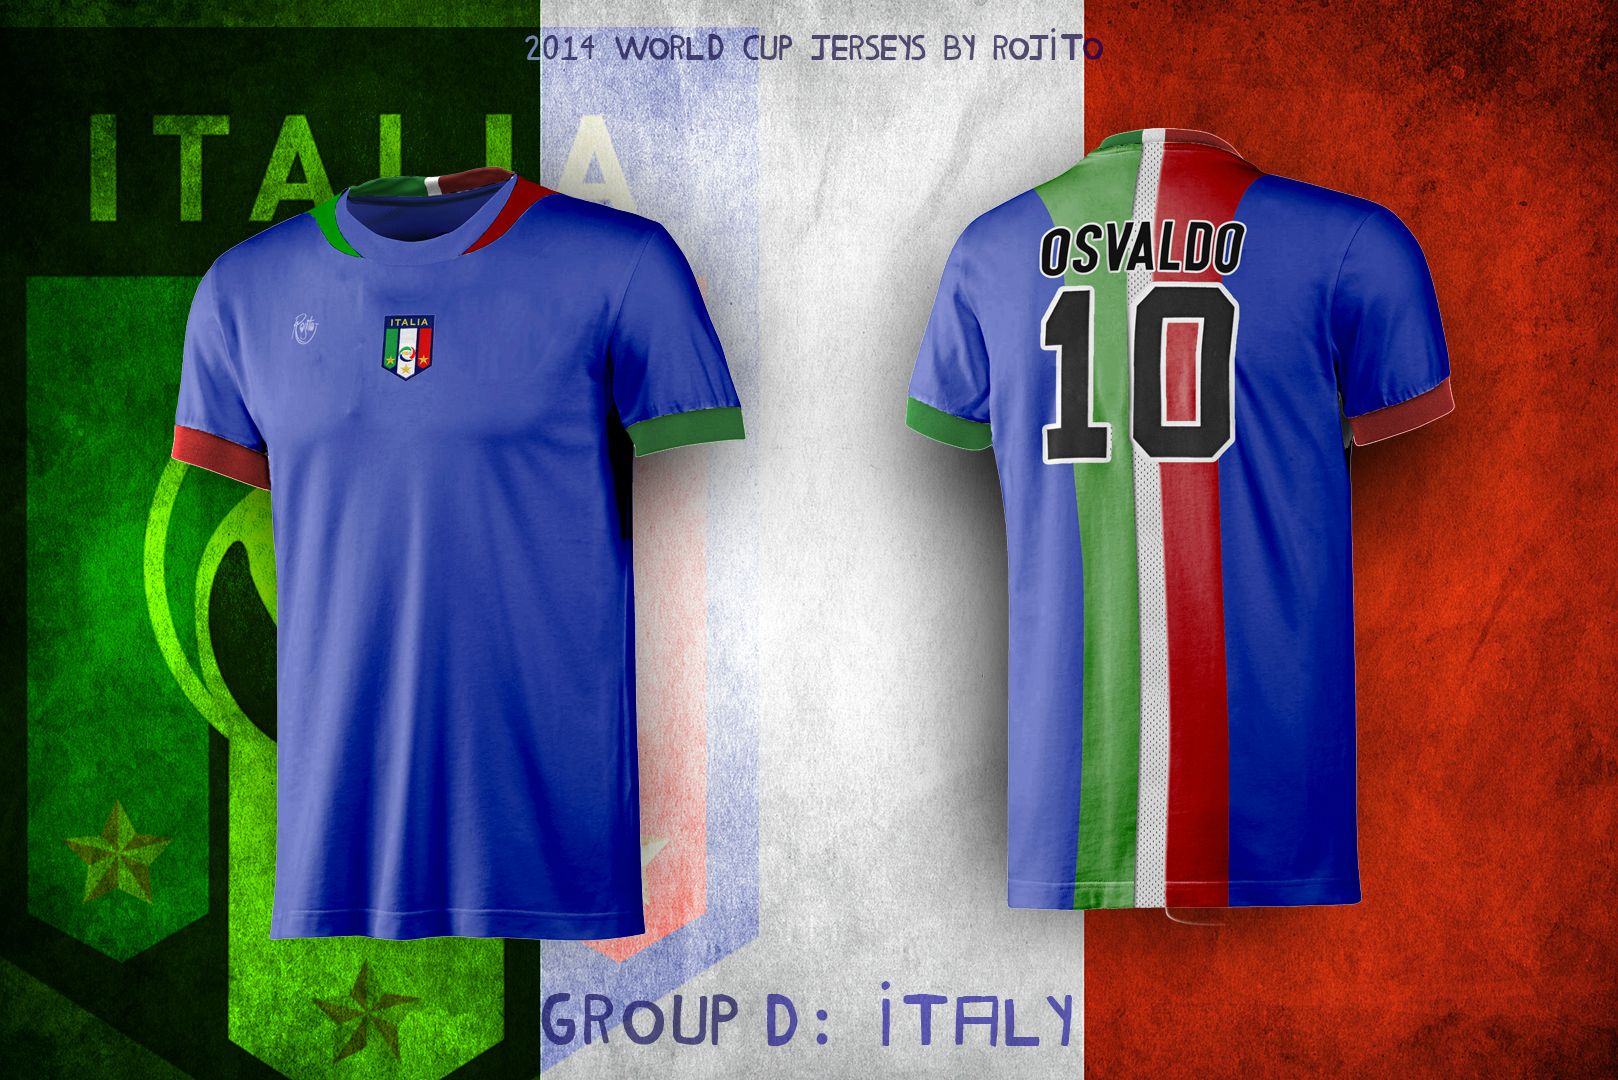 Maillot de foot custom mondial 2014 italie